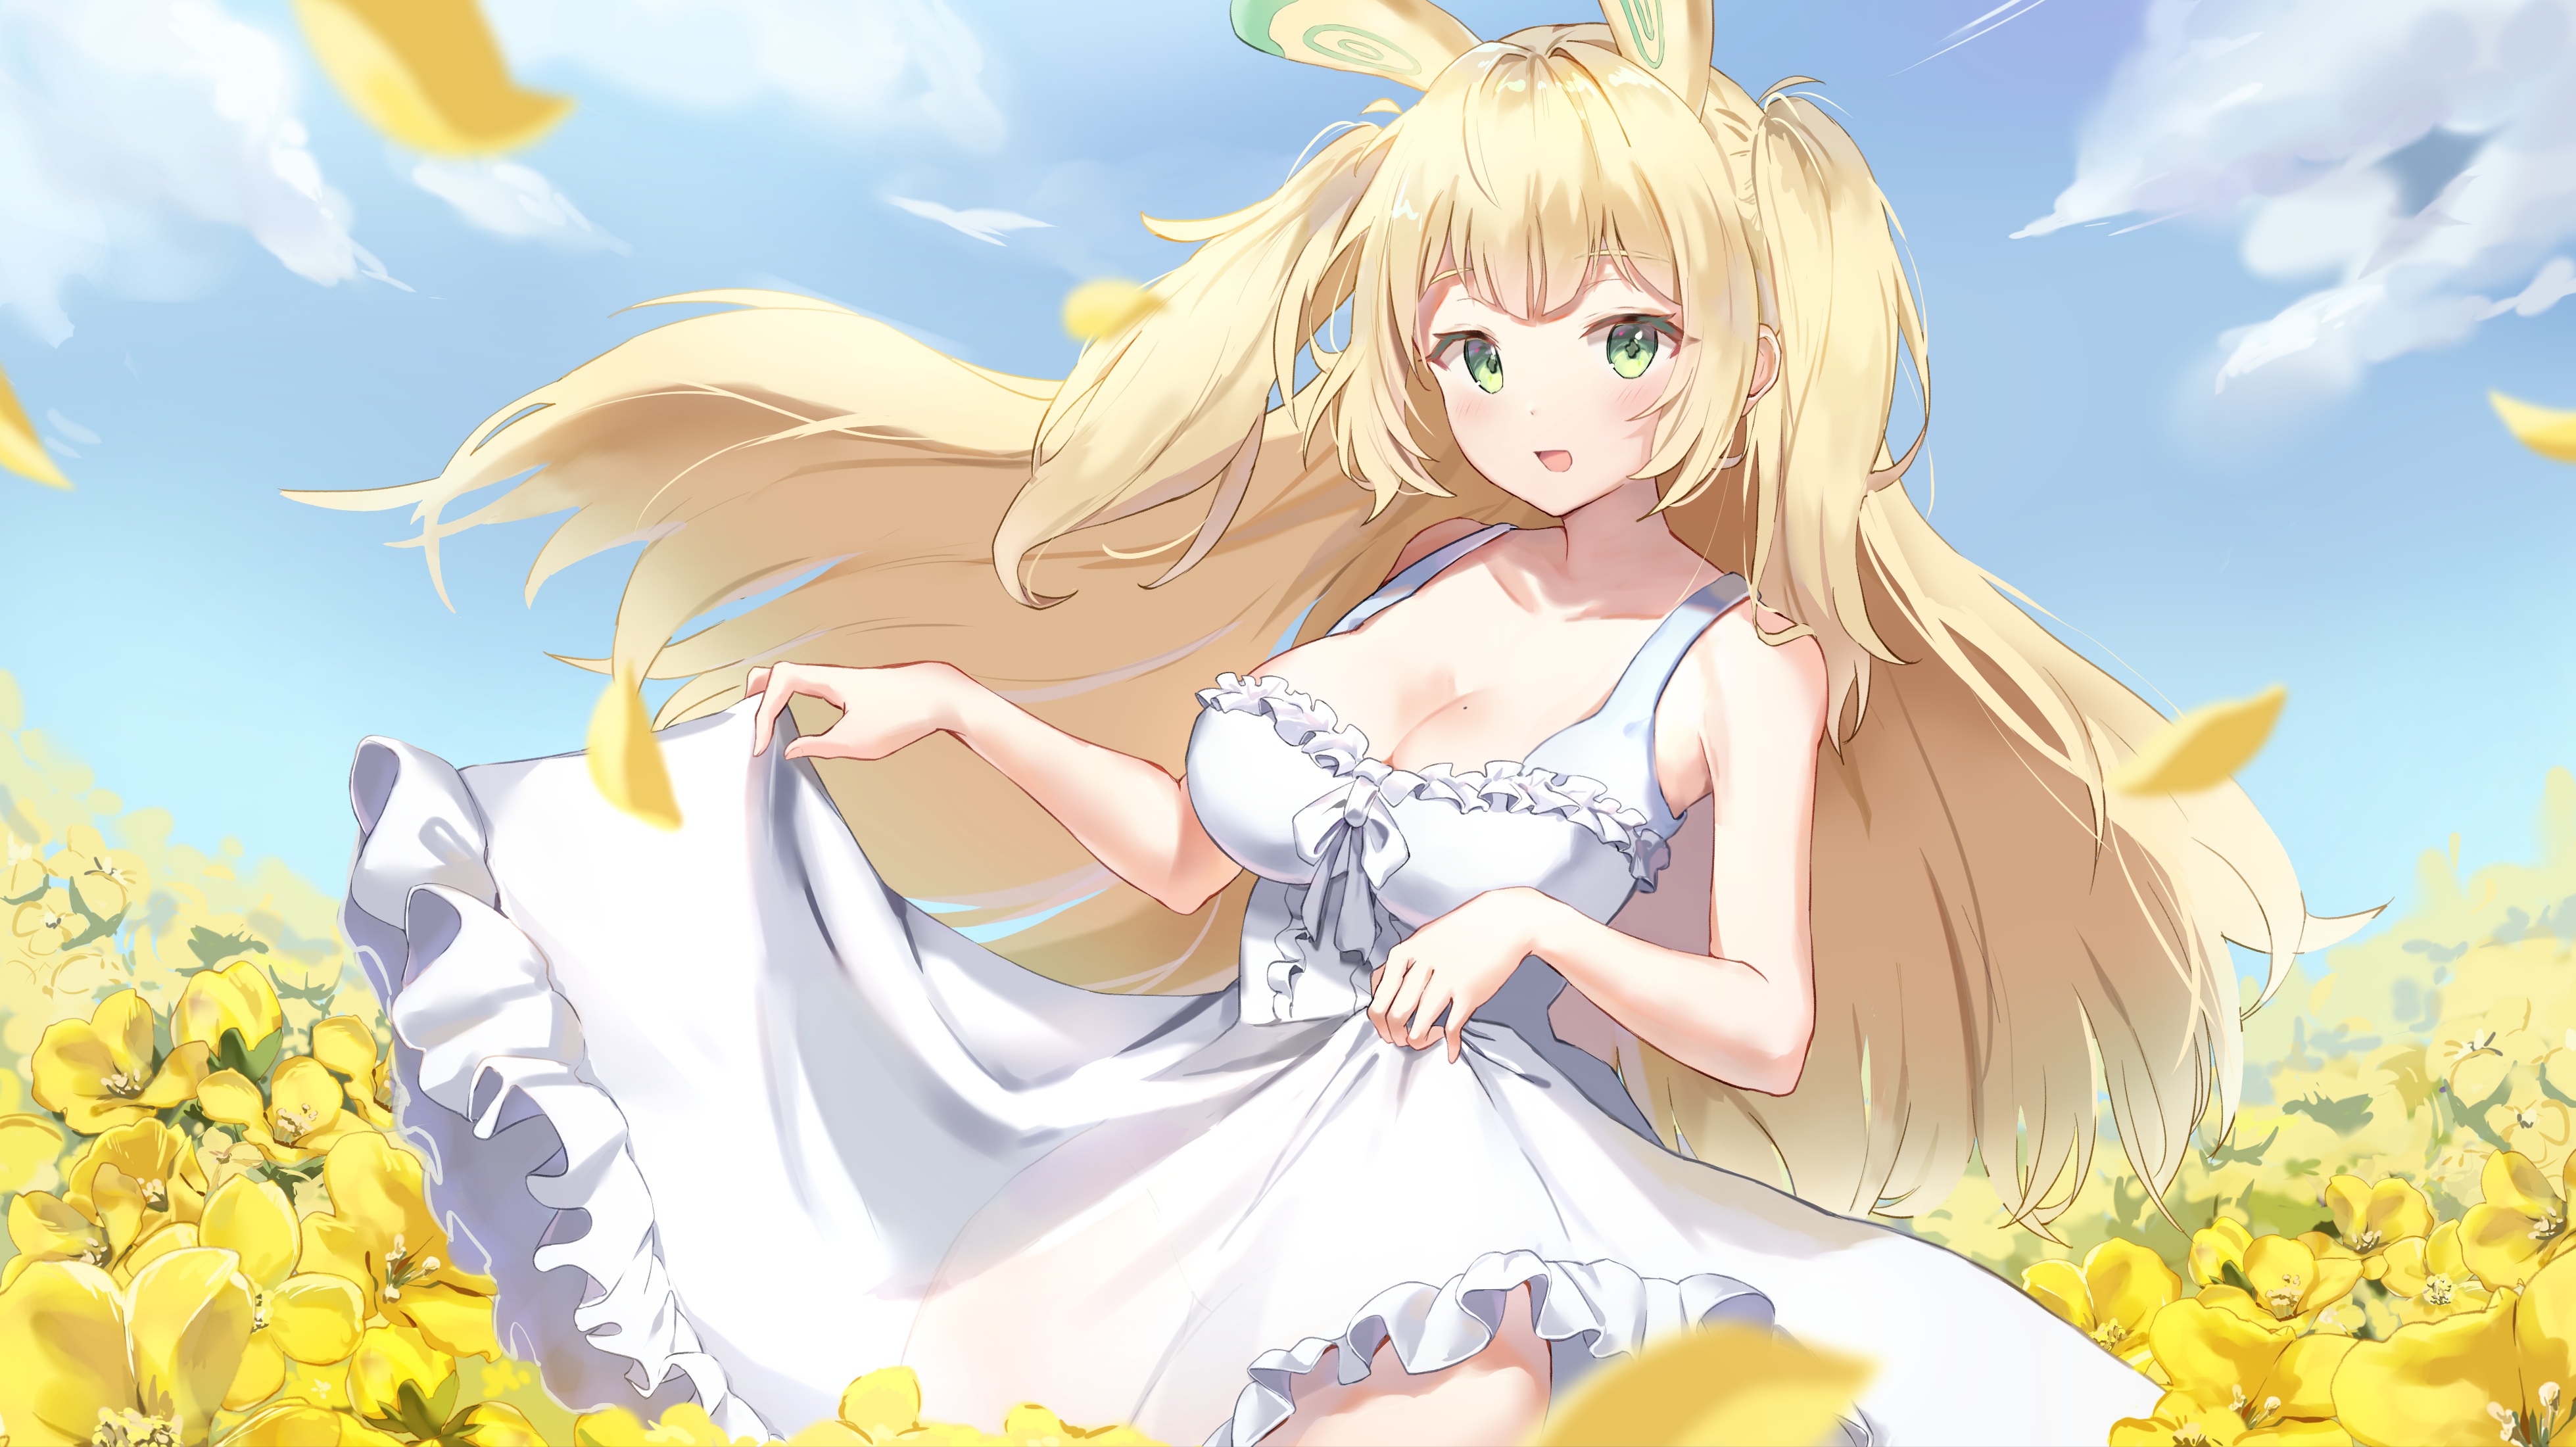 Anime 3918x2201 anime anime girls flowers green eyes blonde animal ears bunny ears lifting dress petals